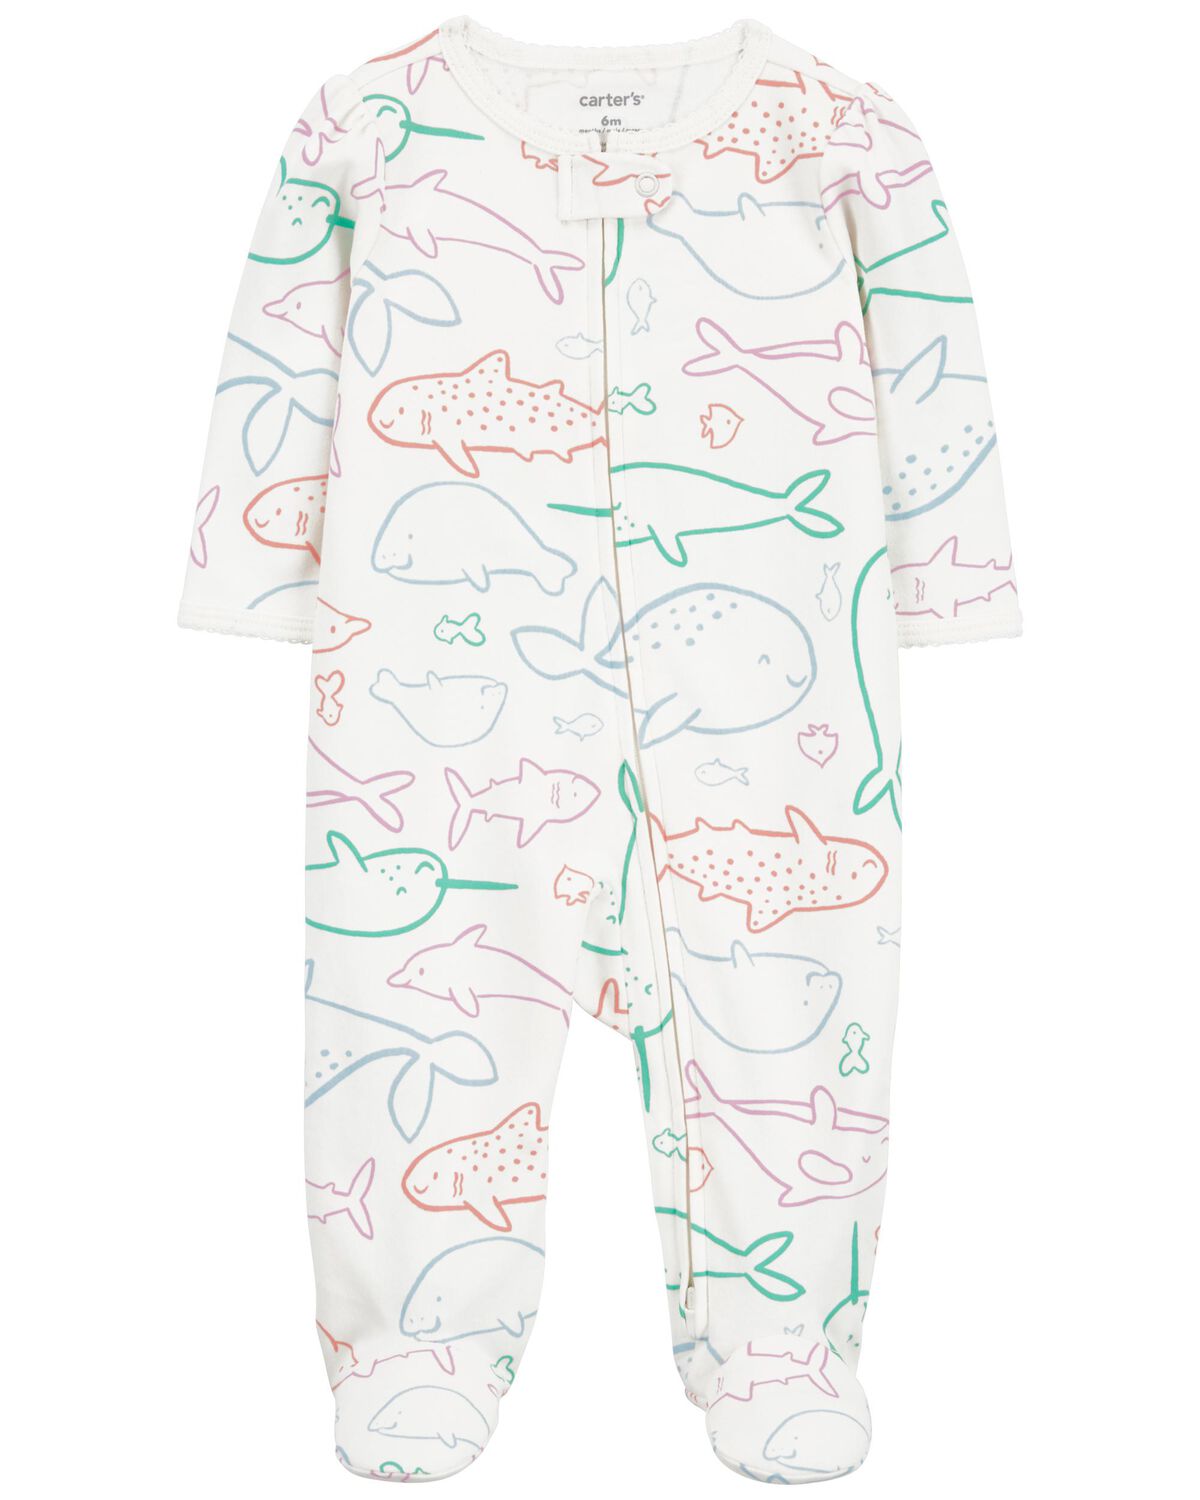 Baby Whale Zip-Up Sleep & Play Pajamas